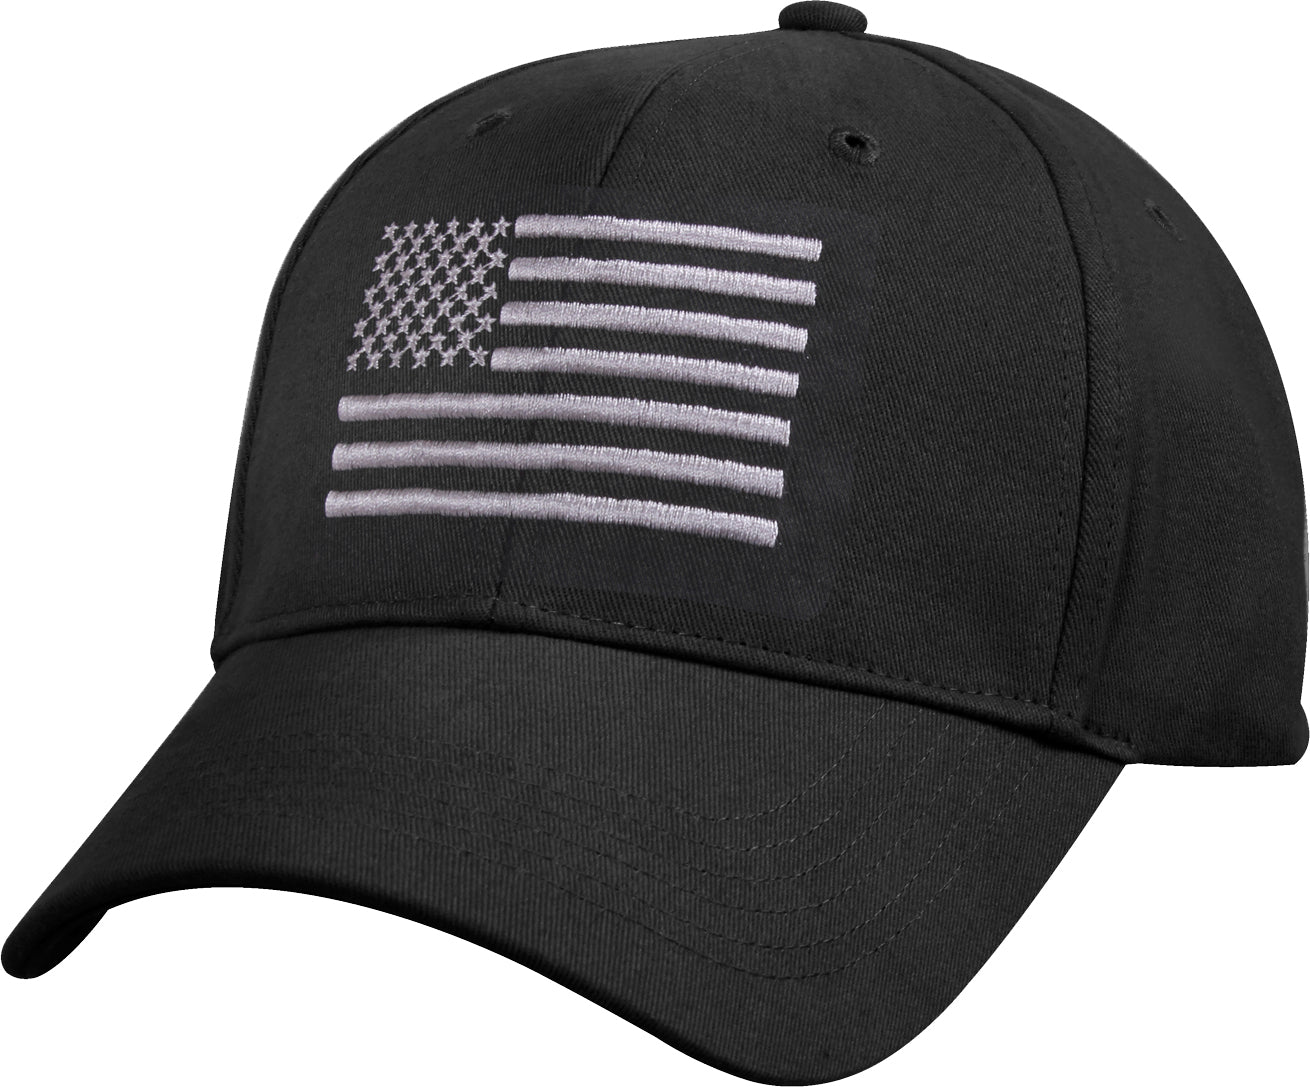 Black/Silver - U.S. Flag Low Profile Cap